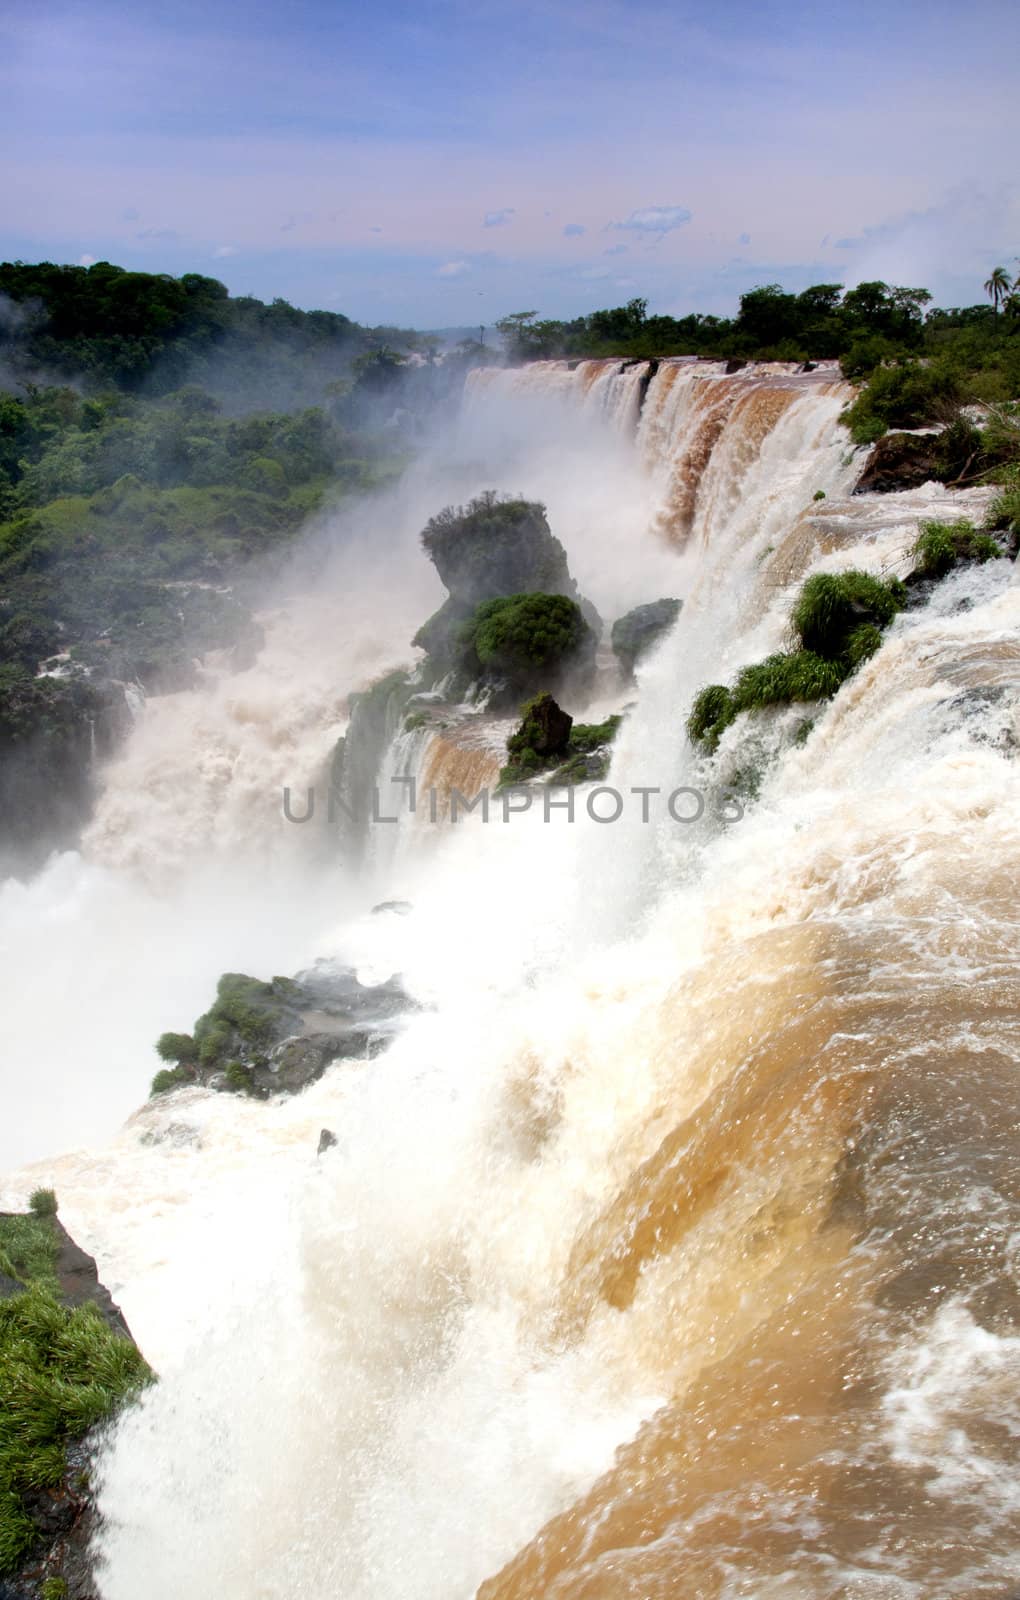 Beautiful Iguazzu falls seen from Argentinian side